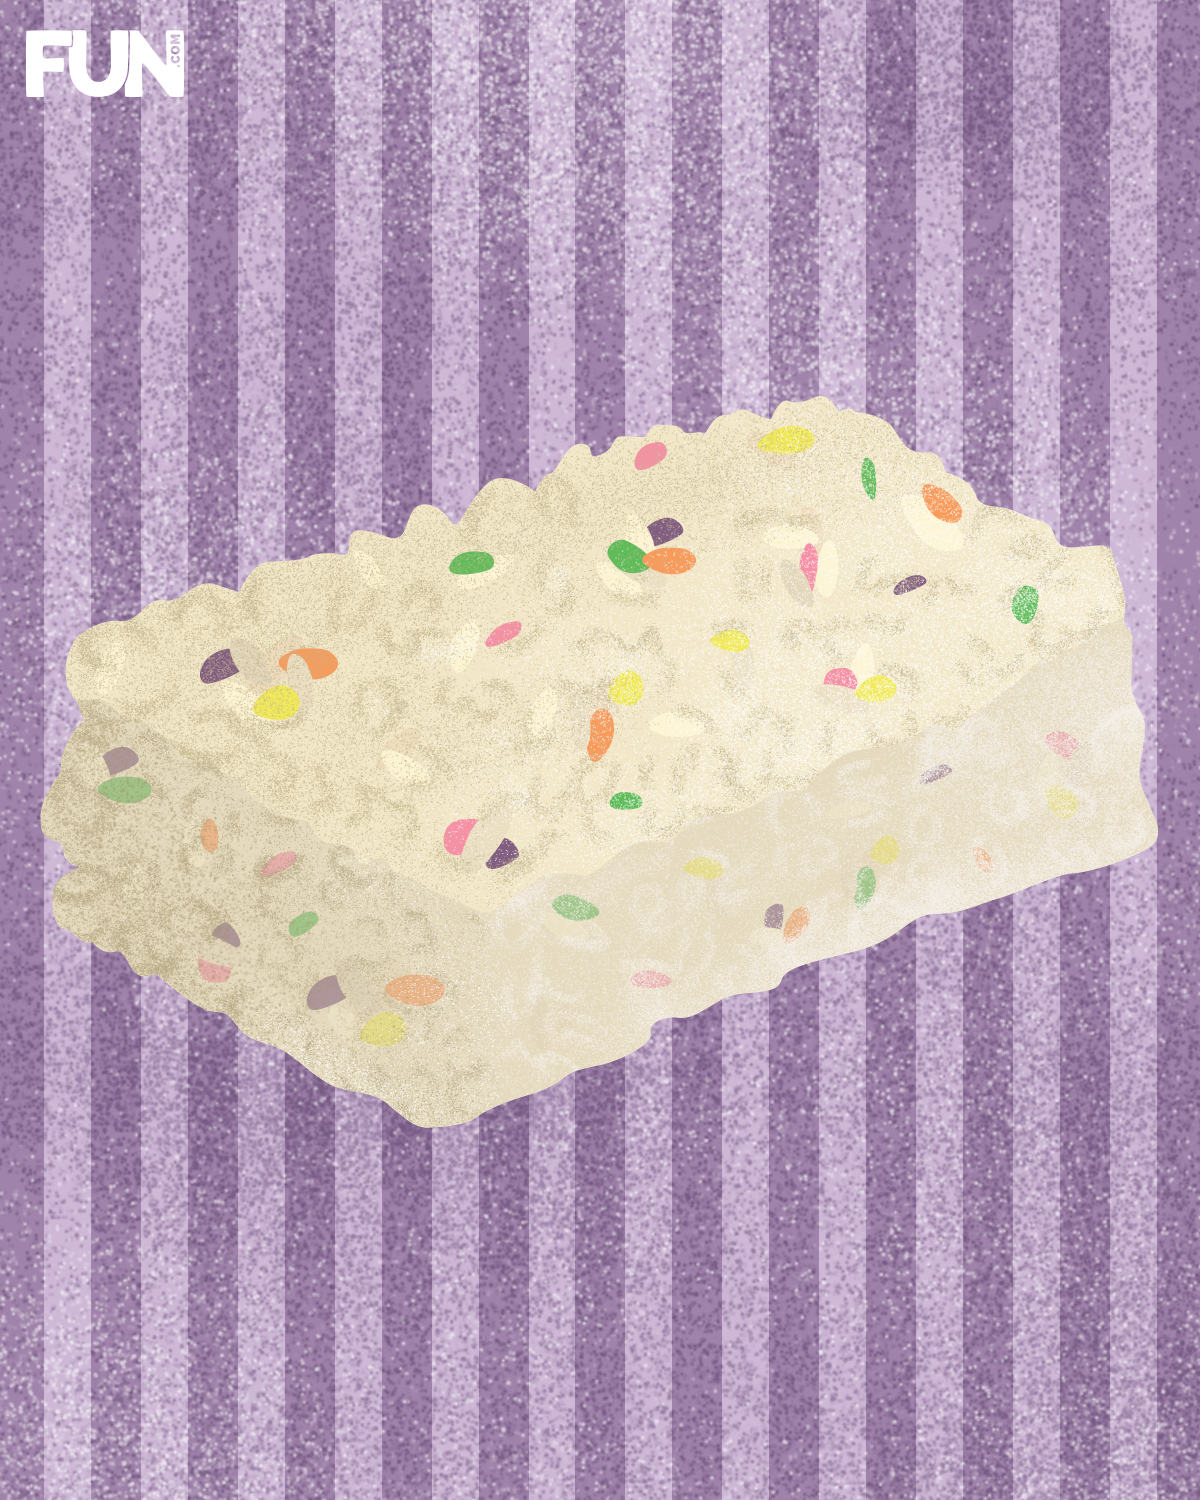 Wonka's Rainbow Rice Krispies